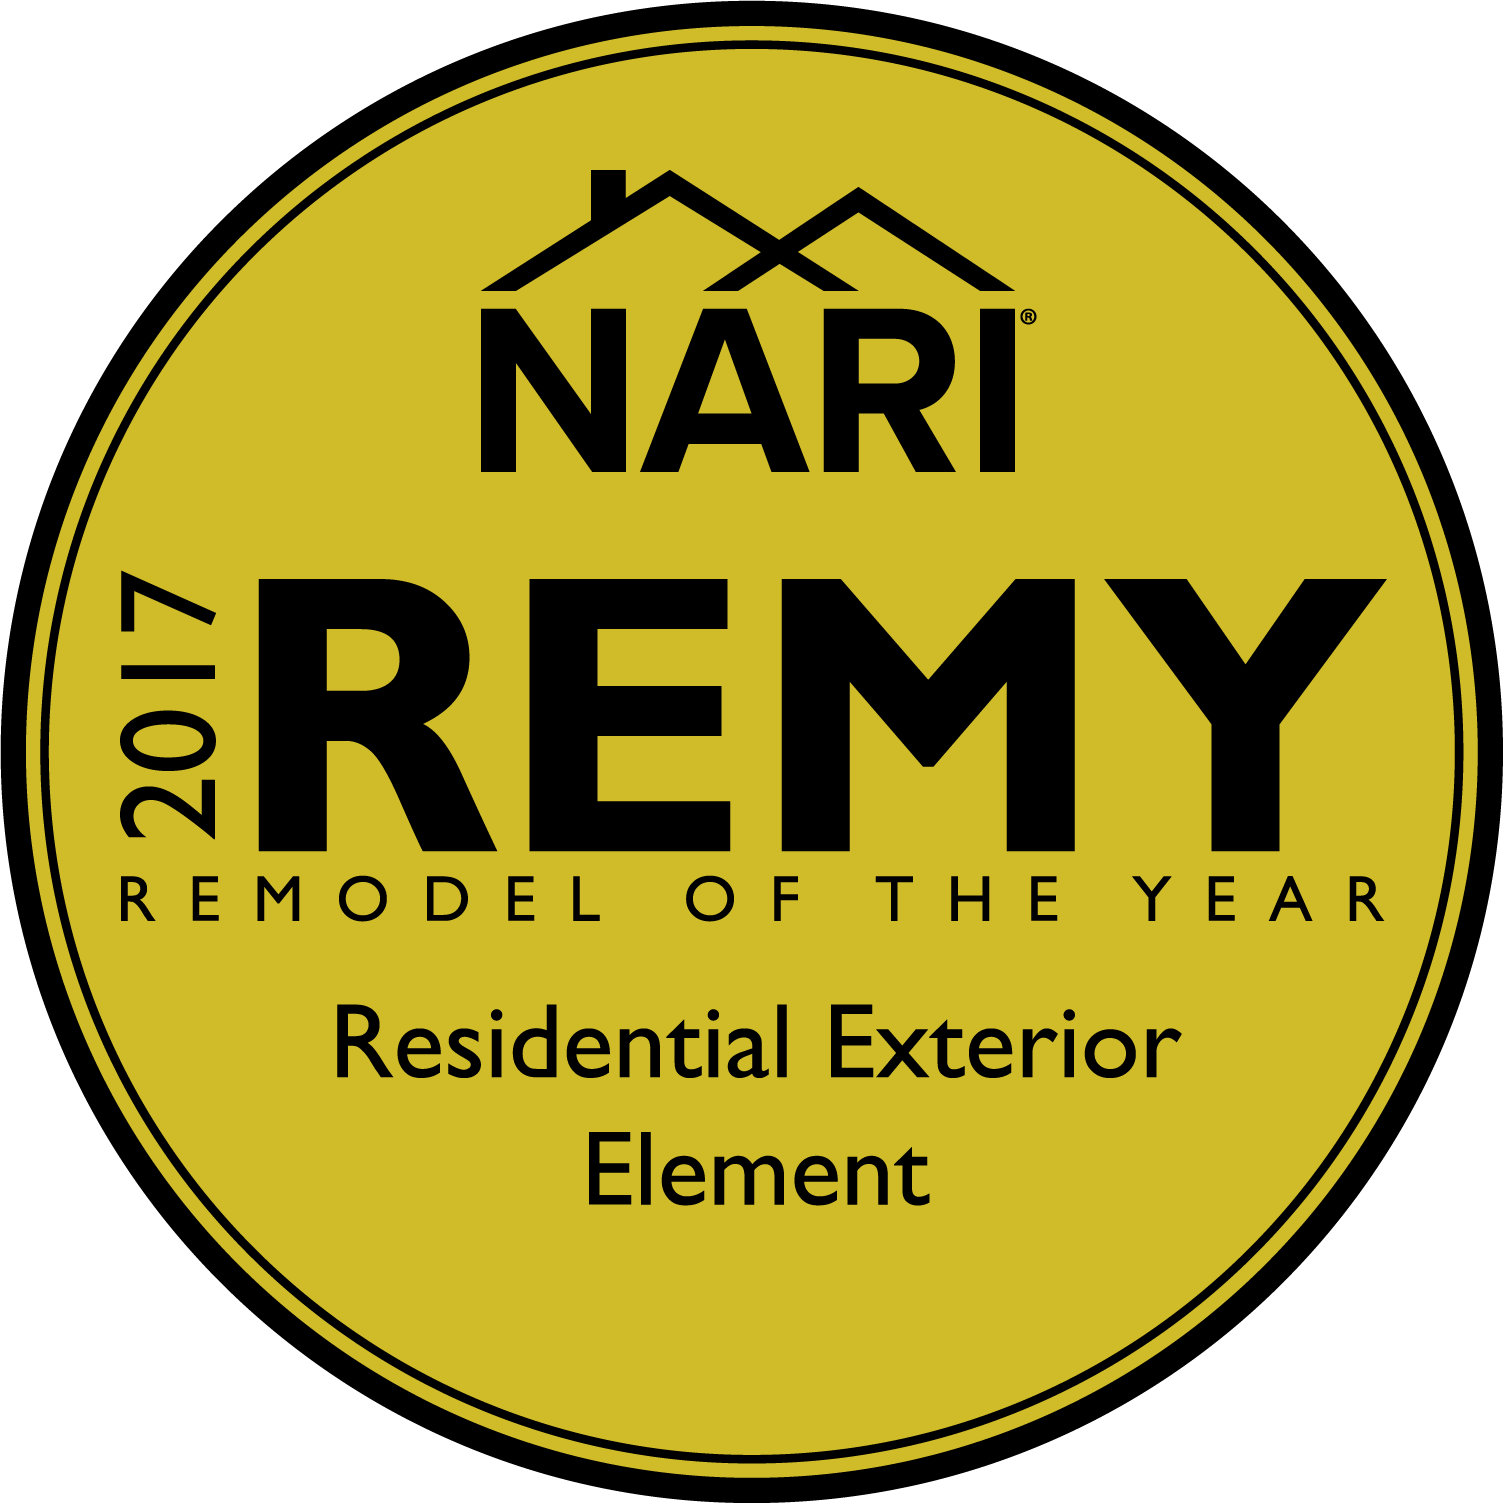 Award Winning Residential Exterior Lighting in Overland Park, Kansas City, 2017 NARI 